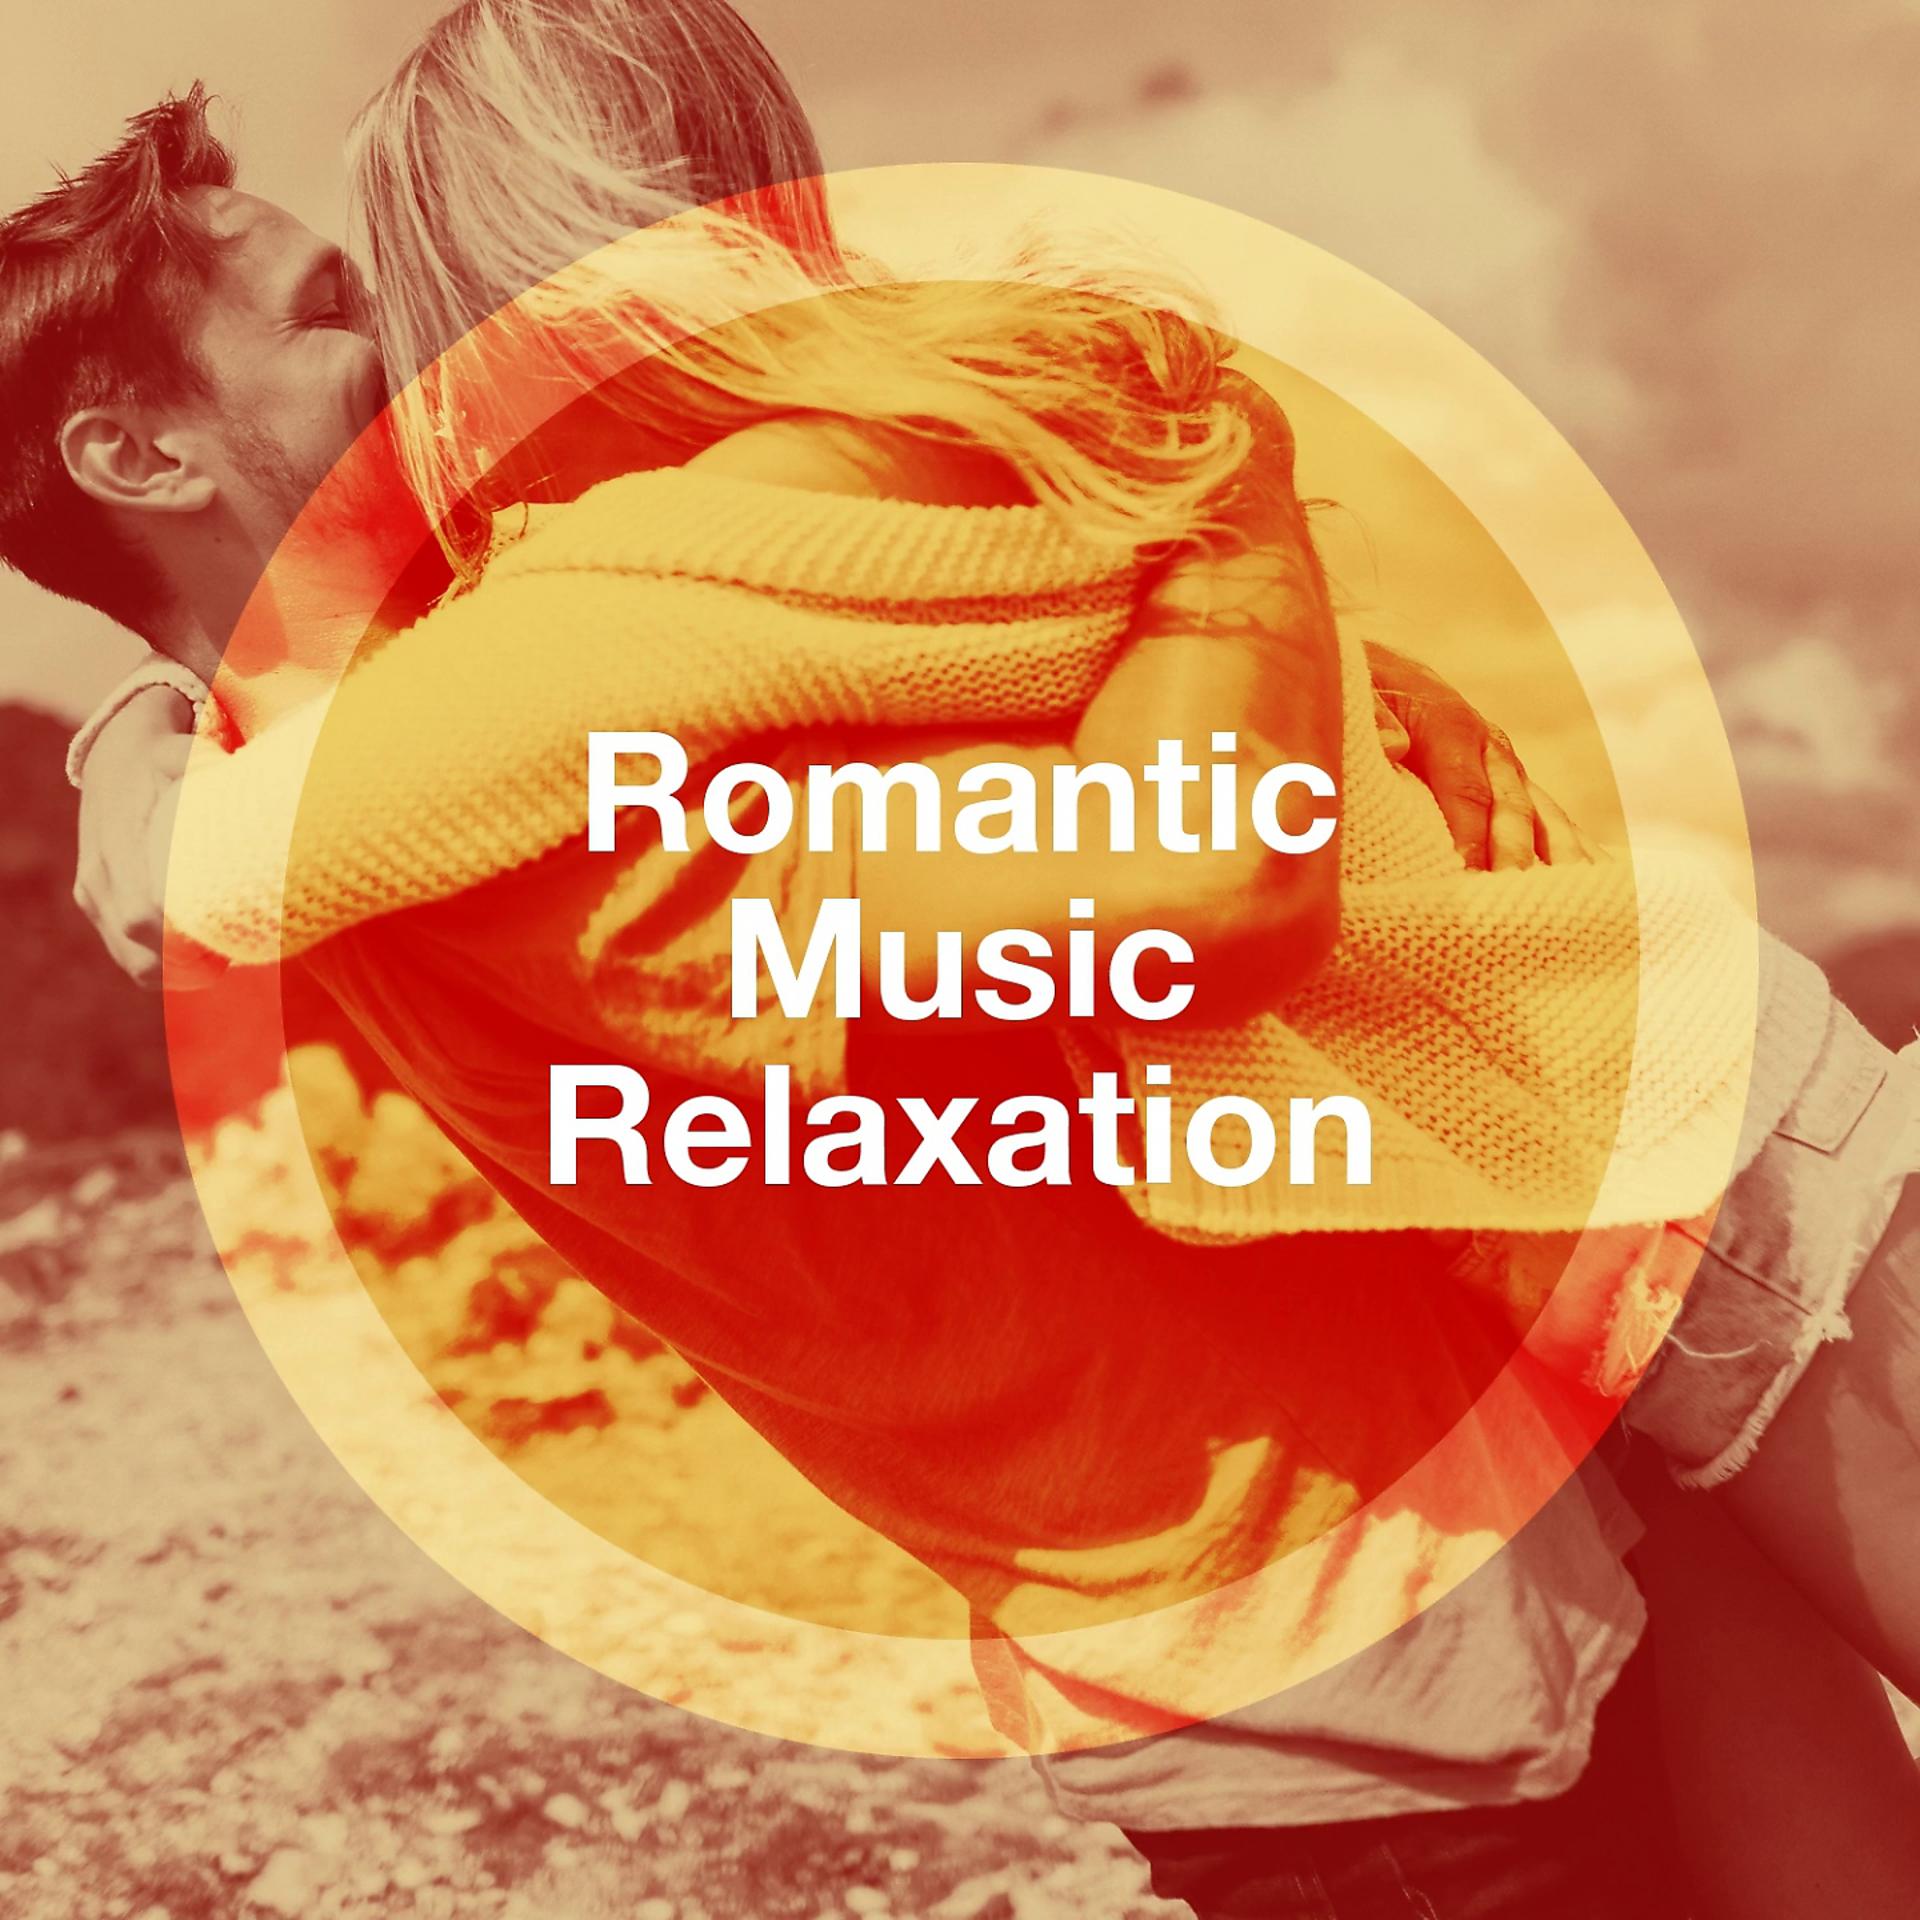 Romance music. Romantic Music. Romantic Love песни. Любимый плейлист. Romantic Music картинки красивые.